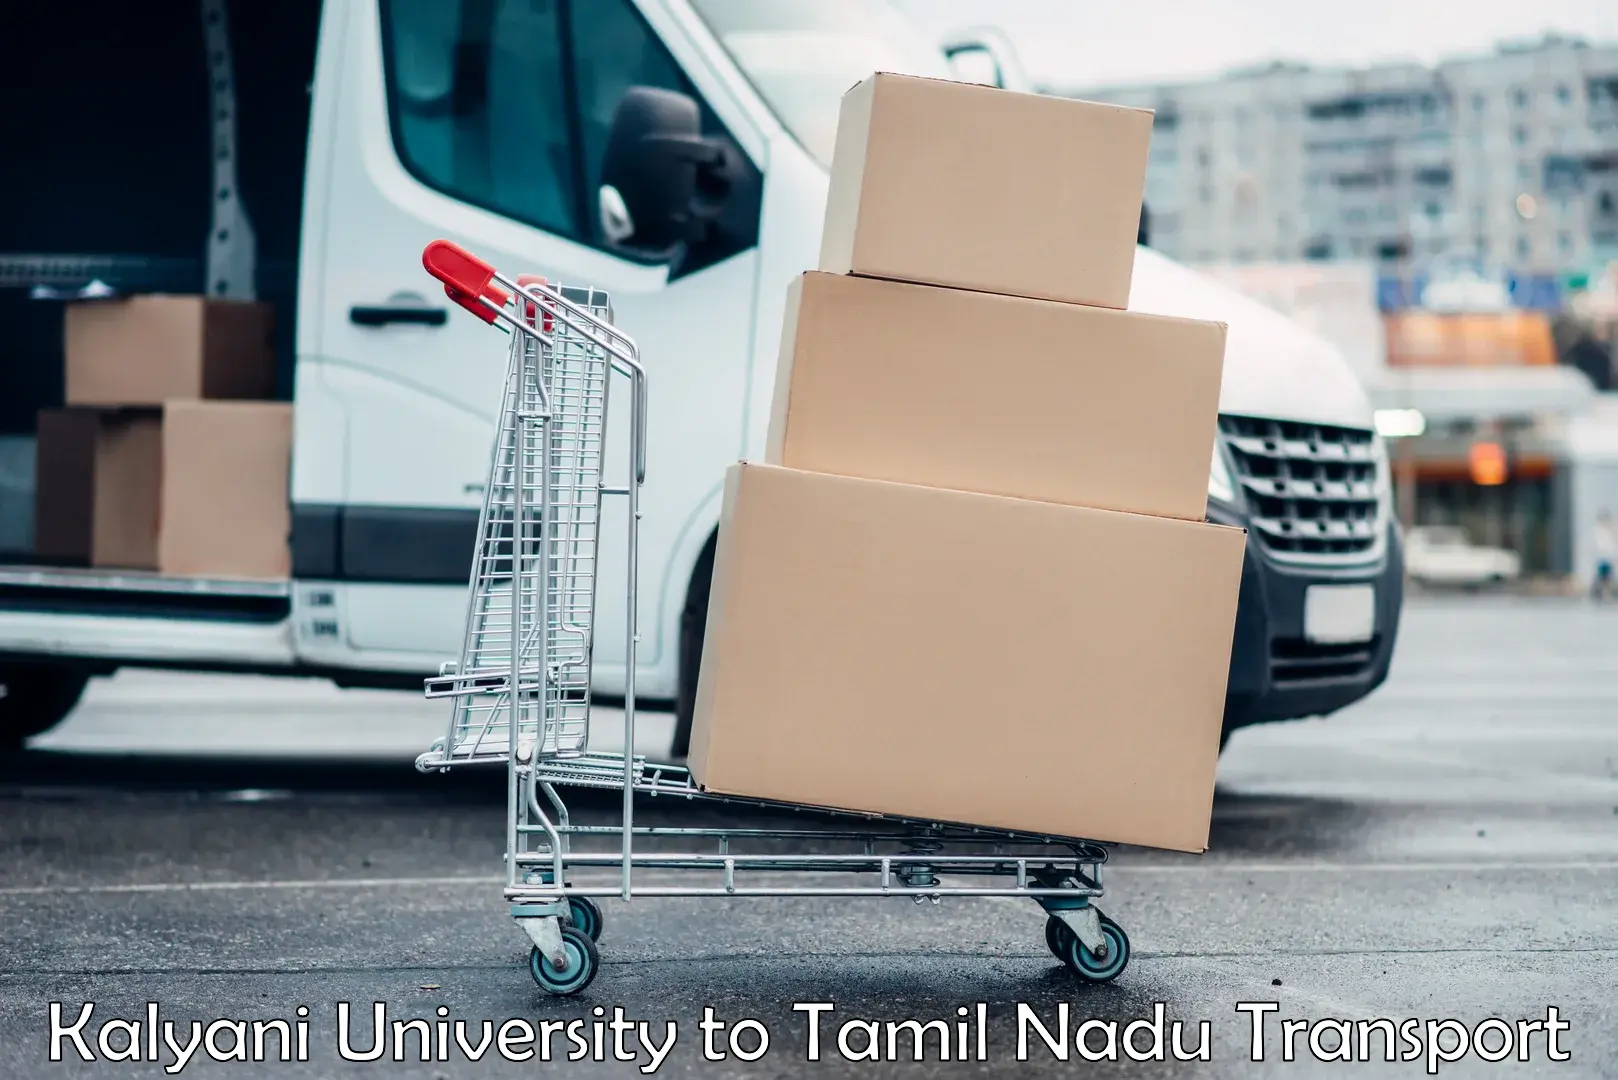 Goods delivery service Kalyani University to IIT Madras